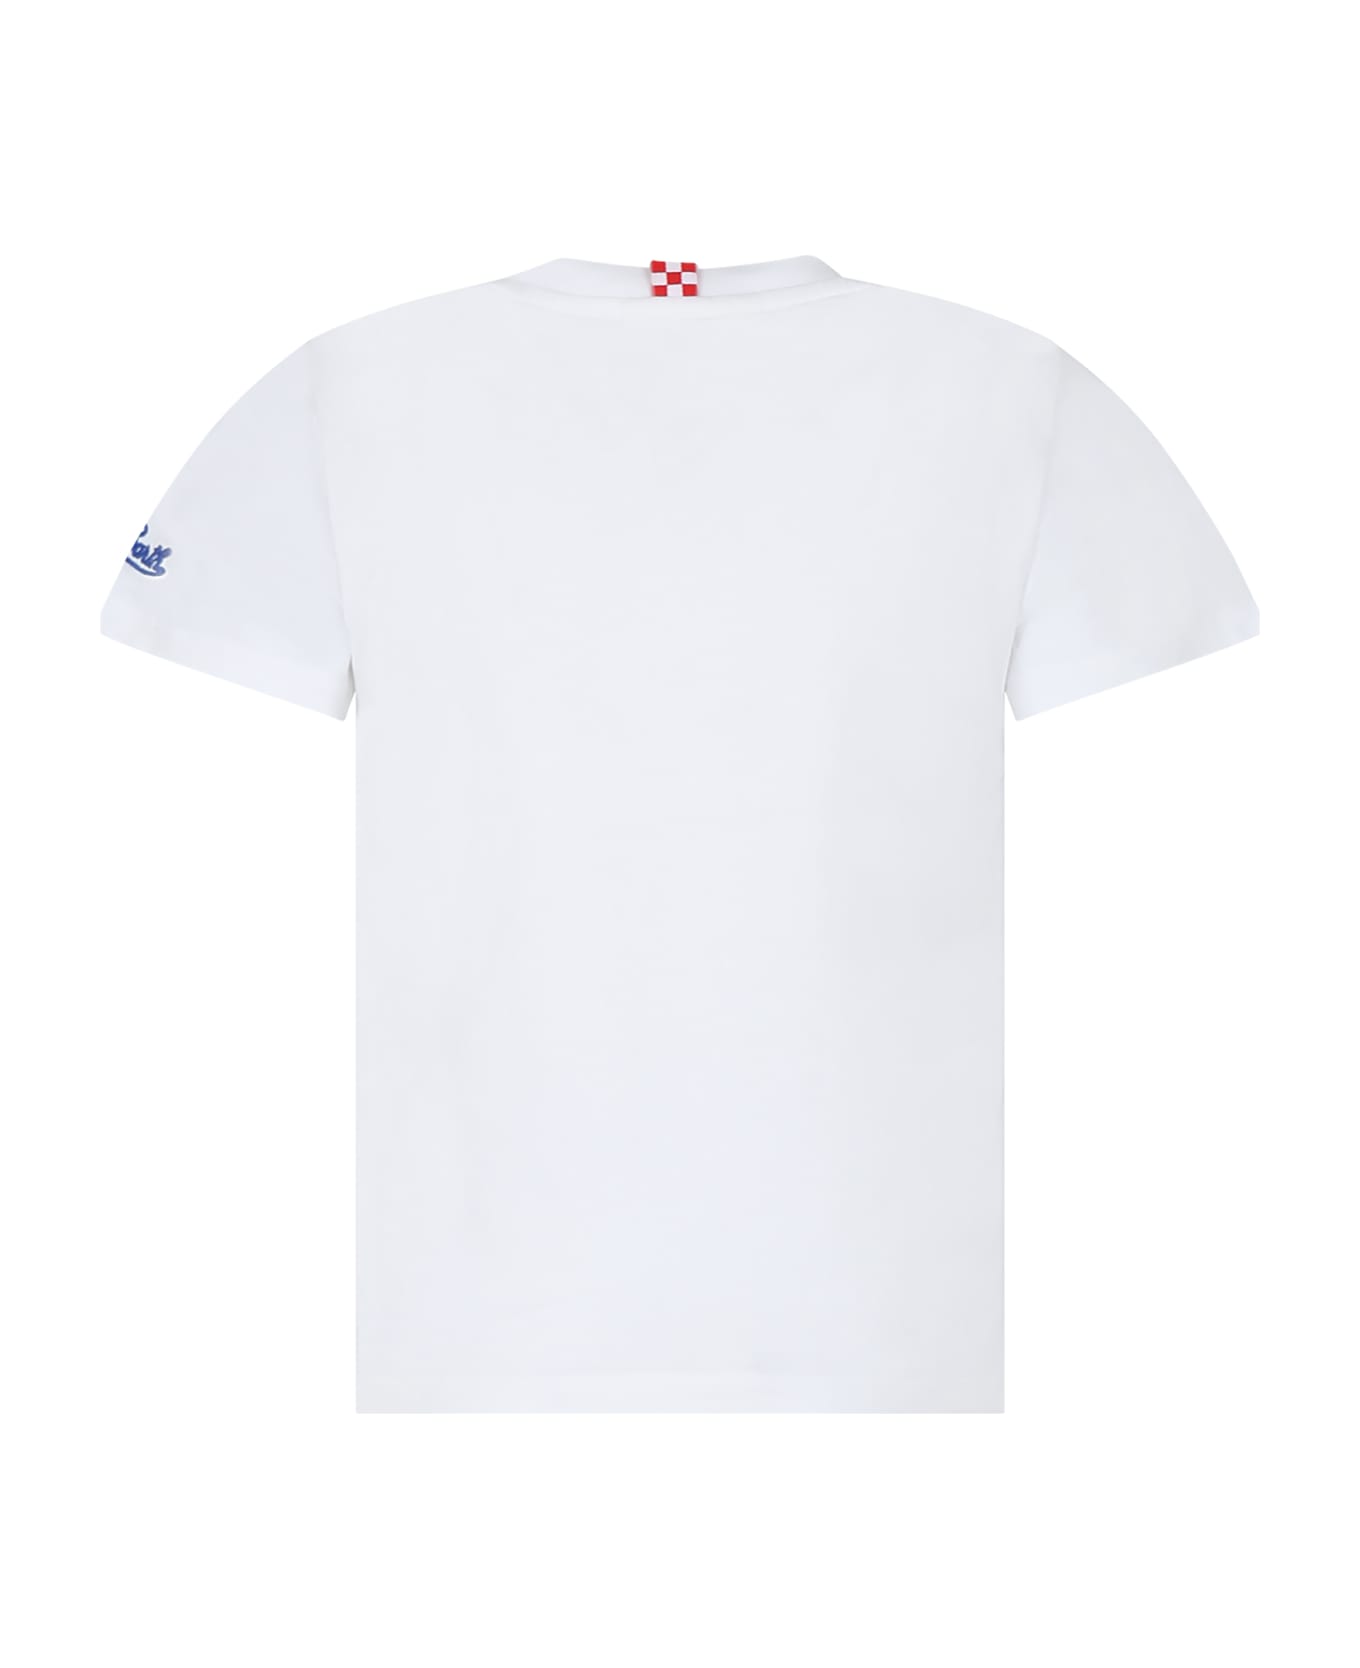 MC2 Saint Barth White T-shirt For Boy With Estathé Print - White